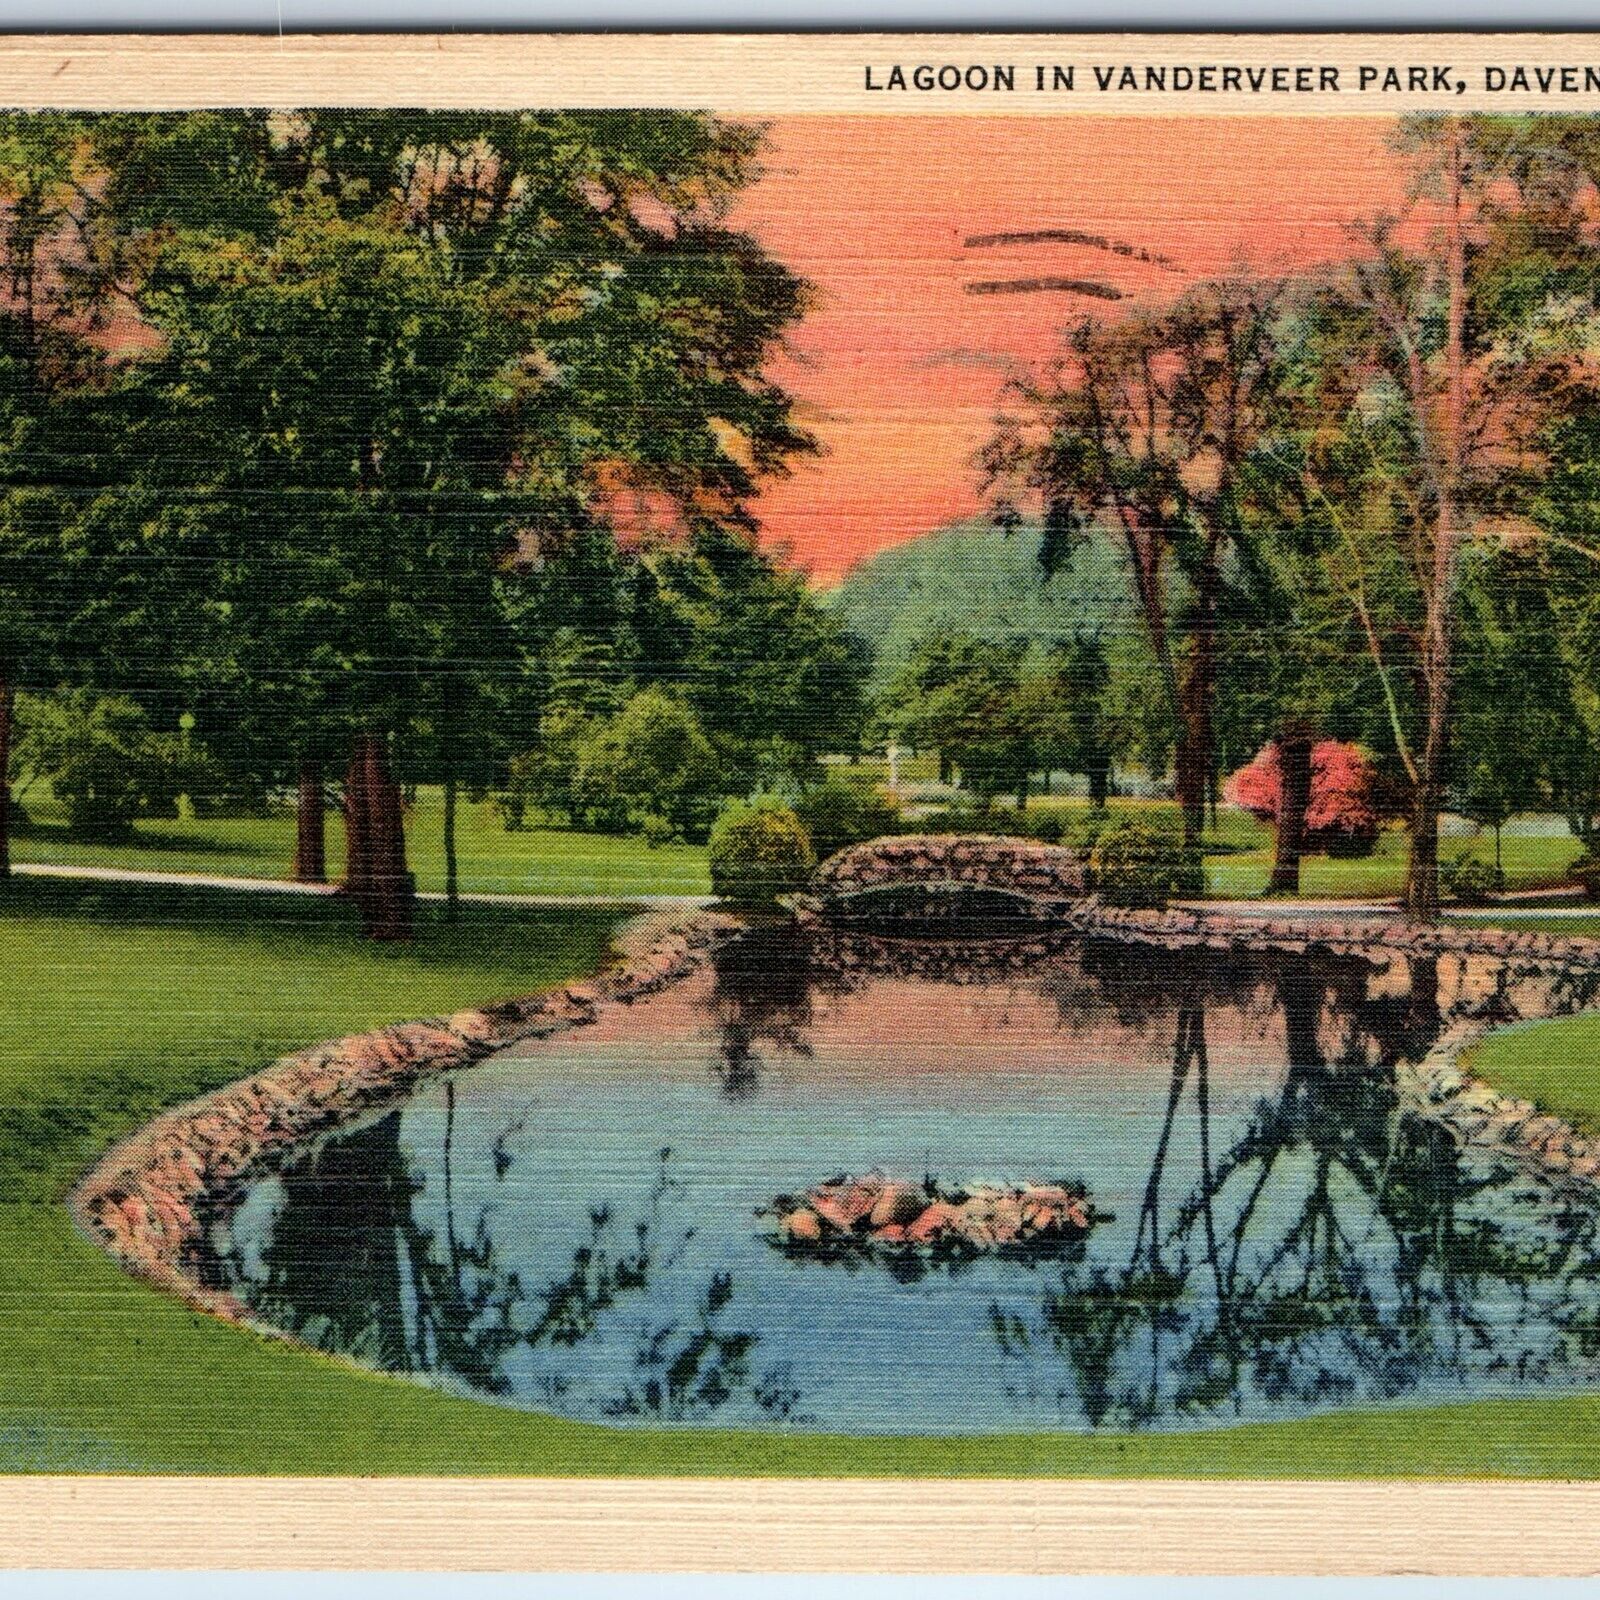 c1940s Davenport, IA Vanderveer Park Lagoon Stone Pond Bridge Sunset Vtg PC A247